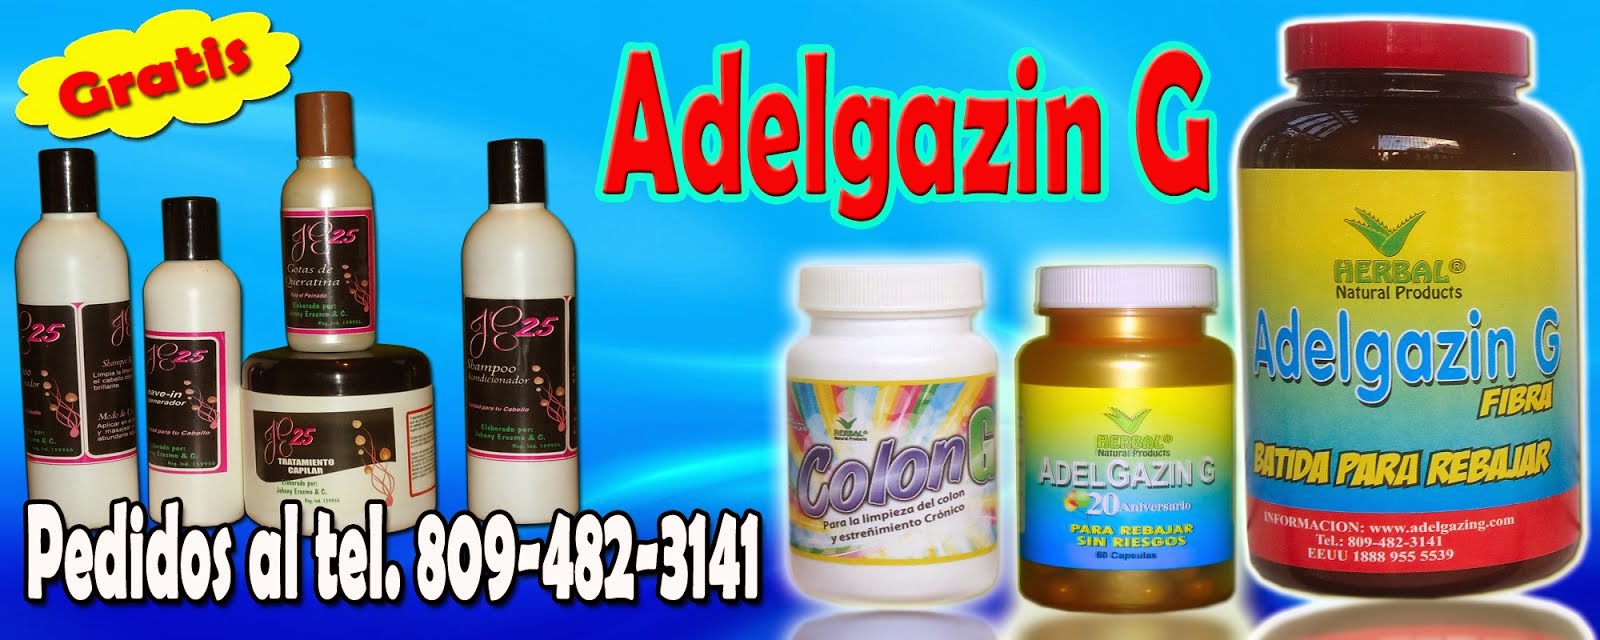 Oferta de Adelgazin G, Linea para el cabello Gratis